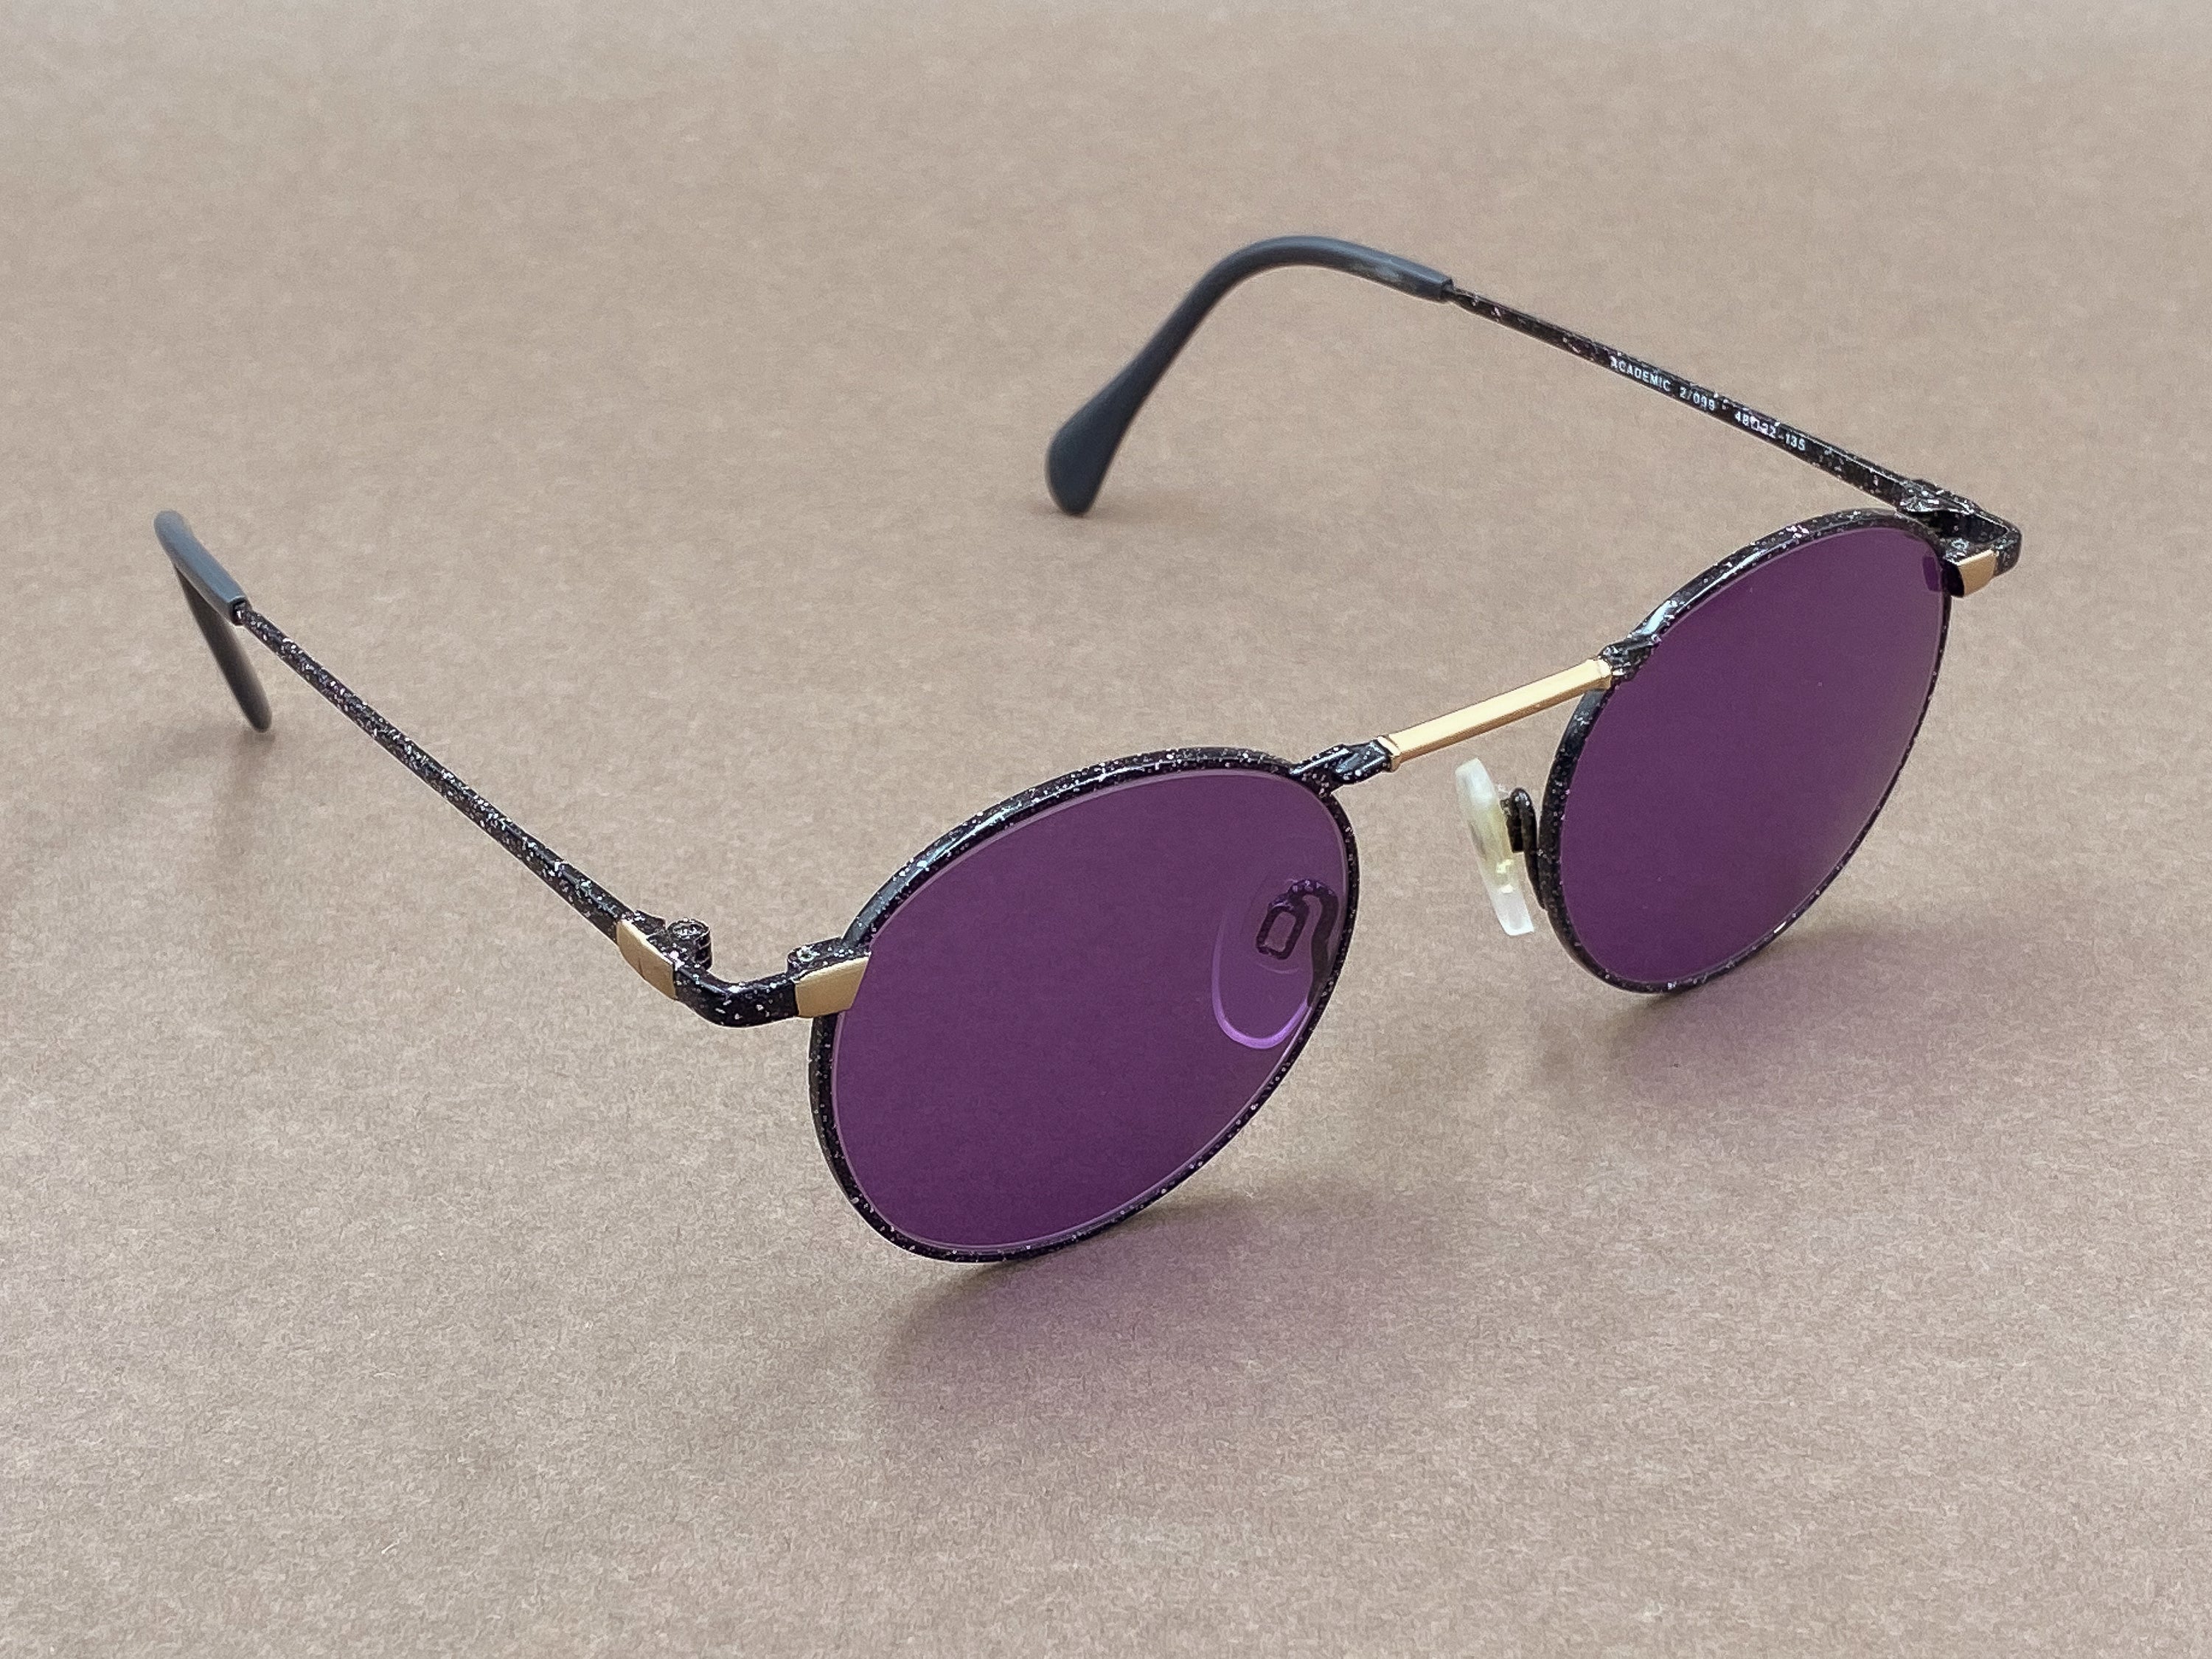 Neostyle Academic 2 sunglasses